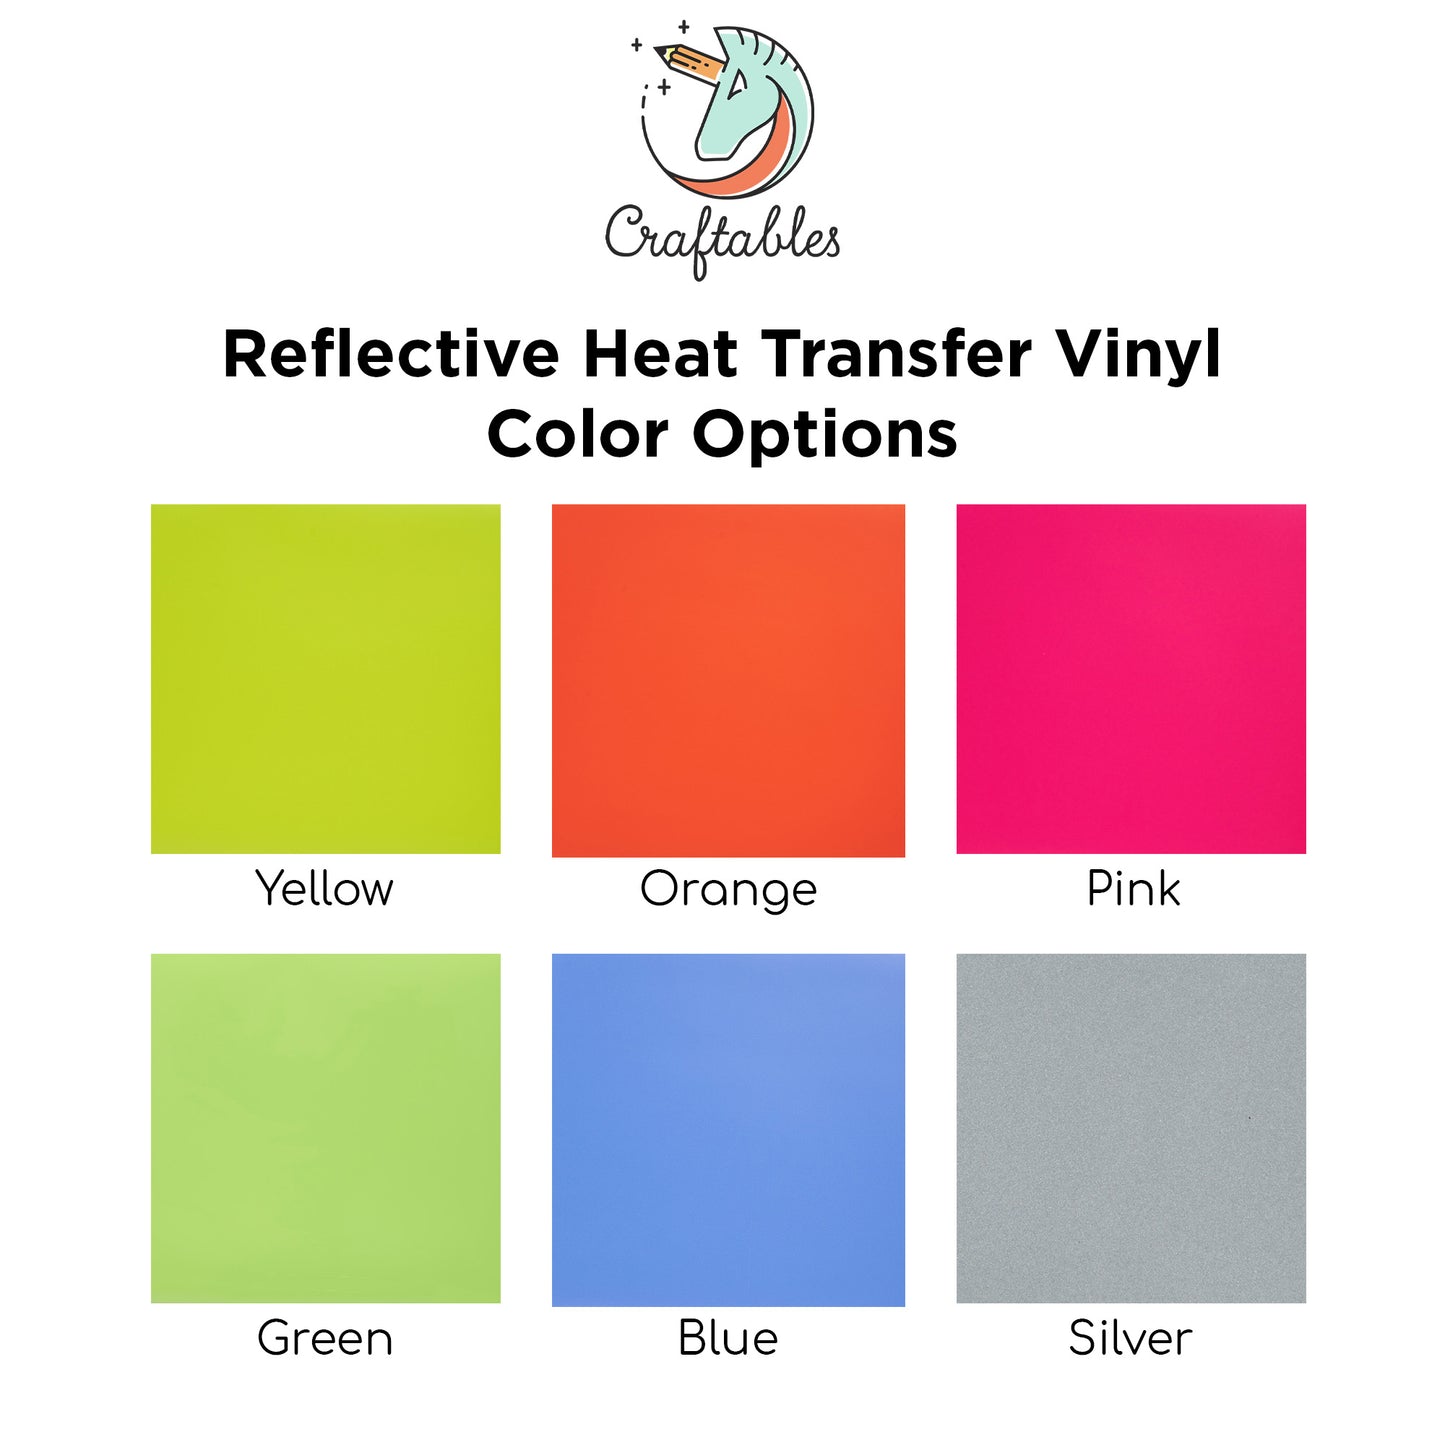 Silver Reflective Reflective Heat Transfer Vinyl Rolls By Craftables